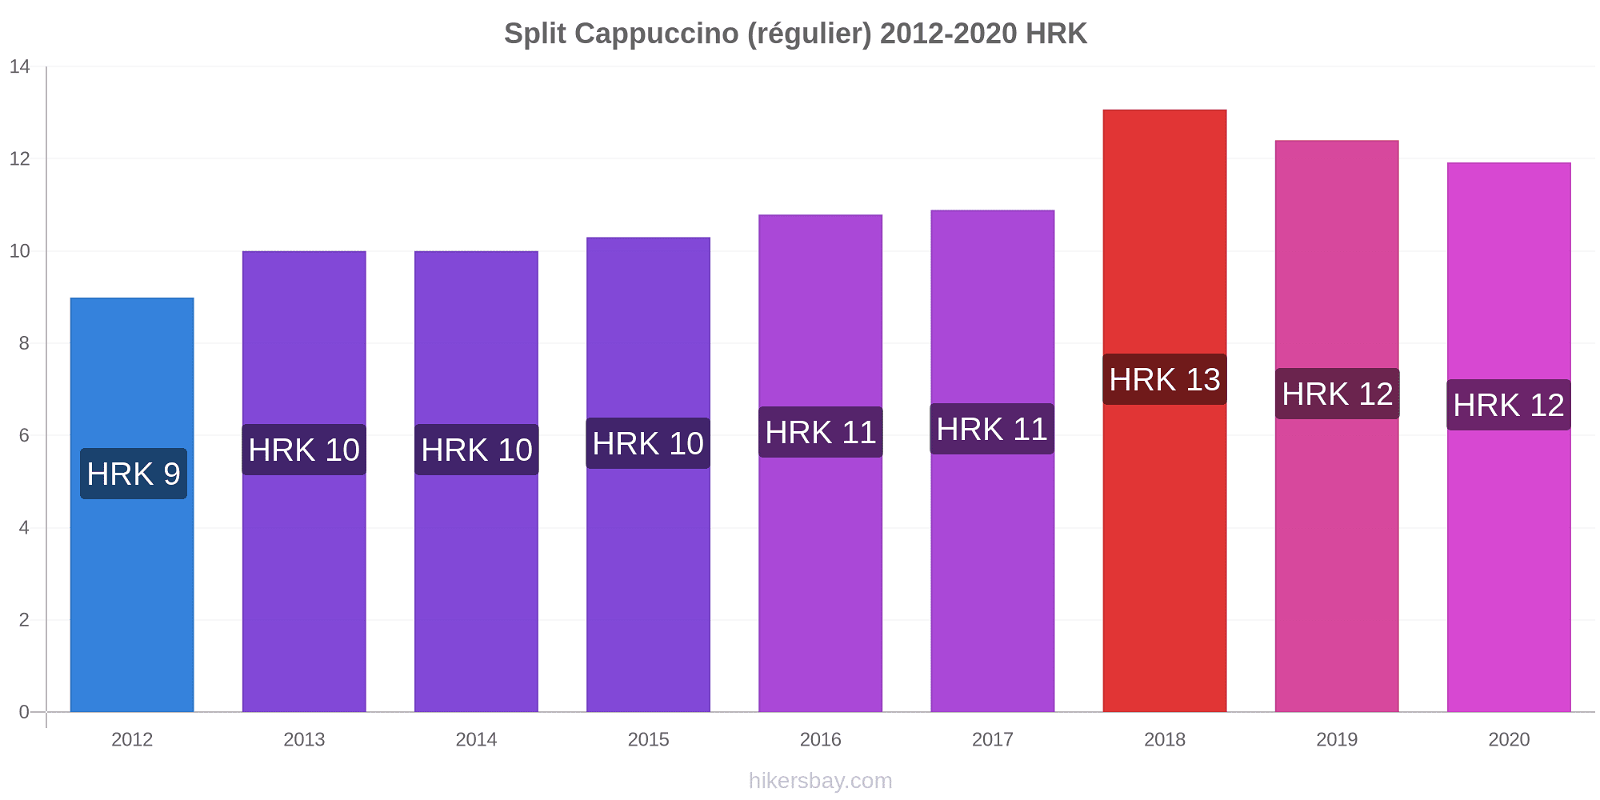 Split changements de prix Cappuccino (régulier) hikersbay.com